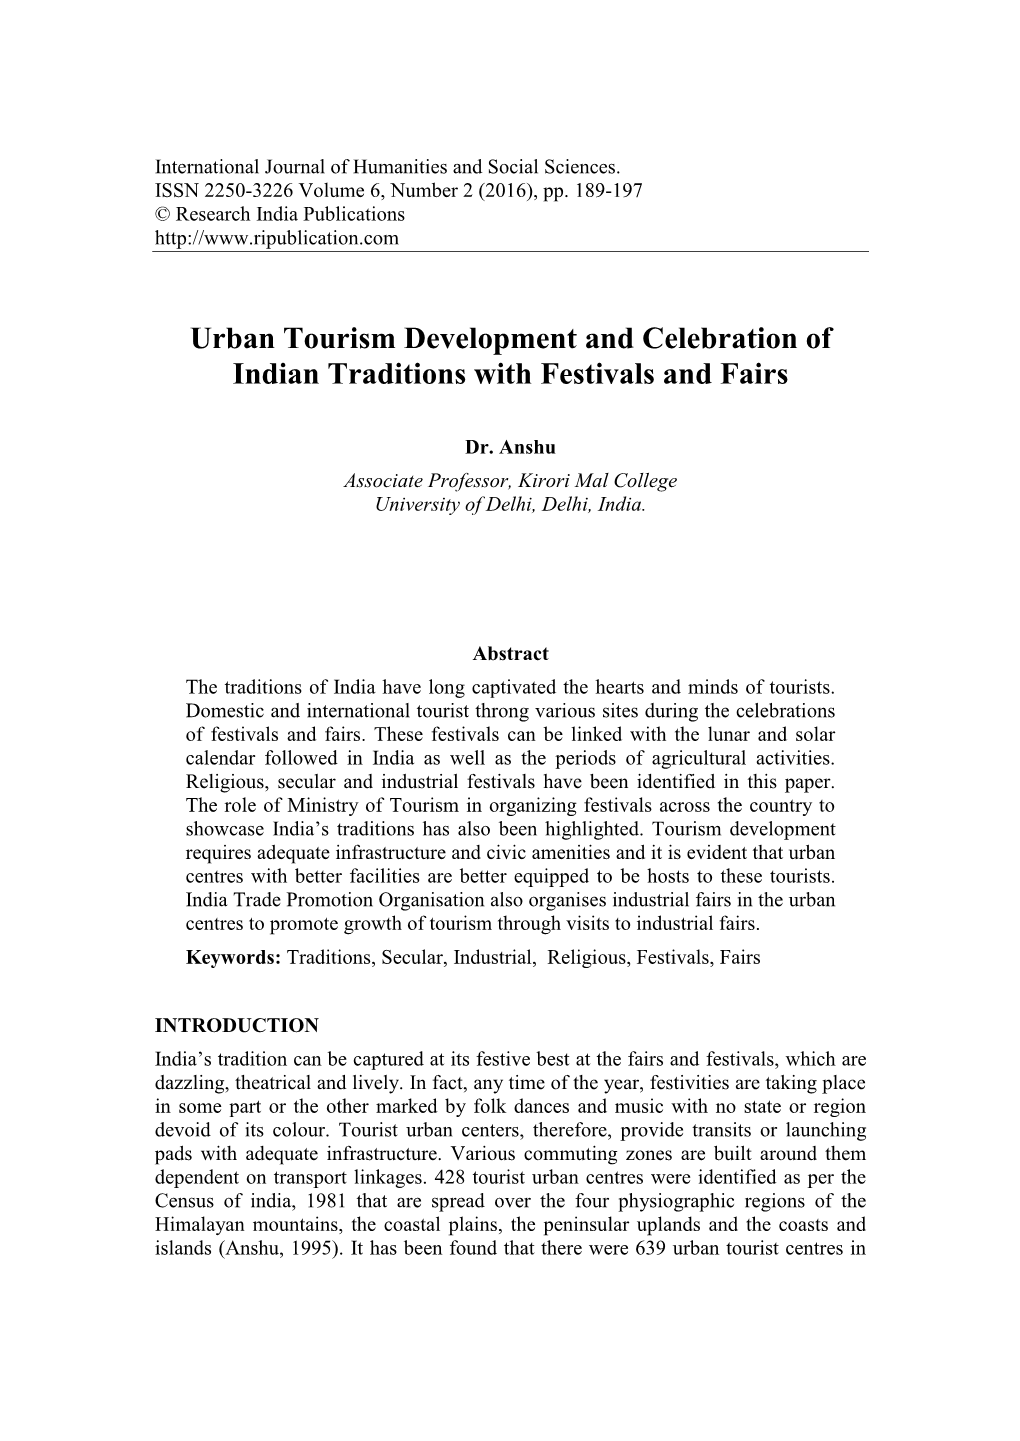 Festivals and Fairs